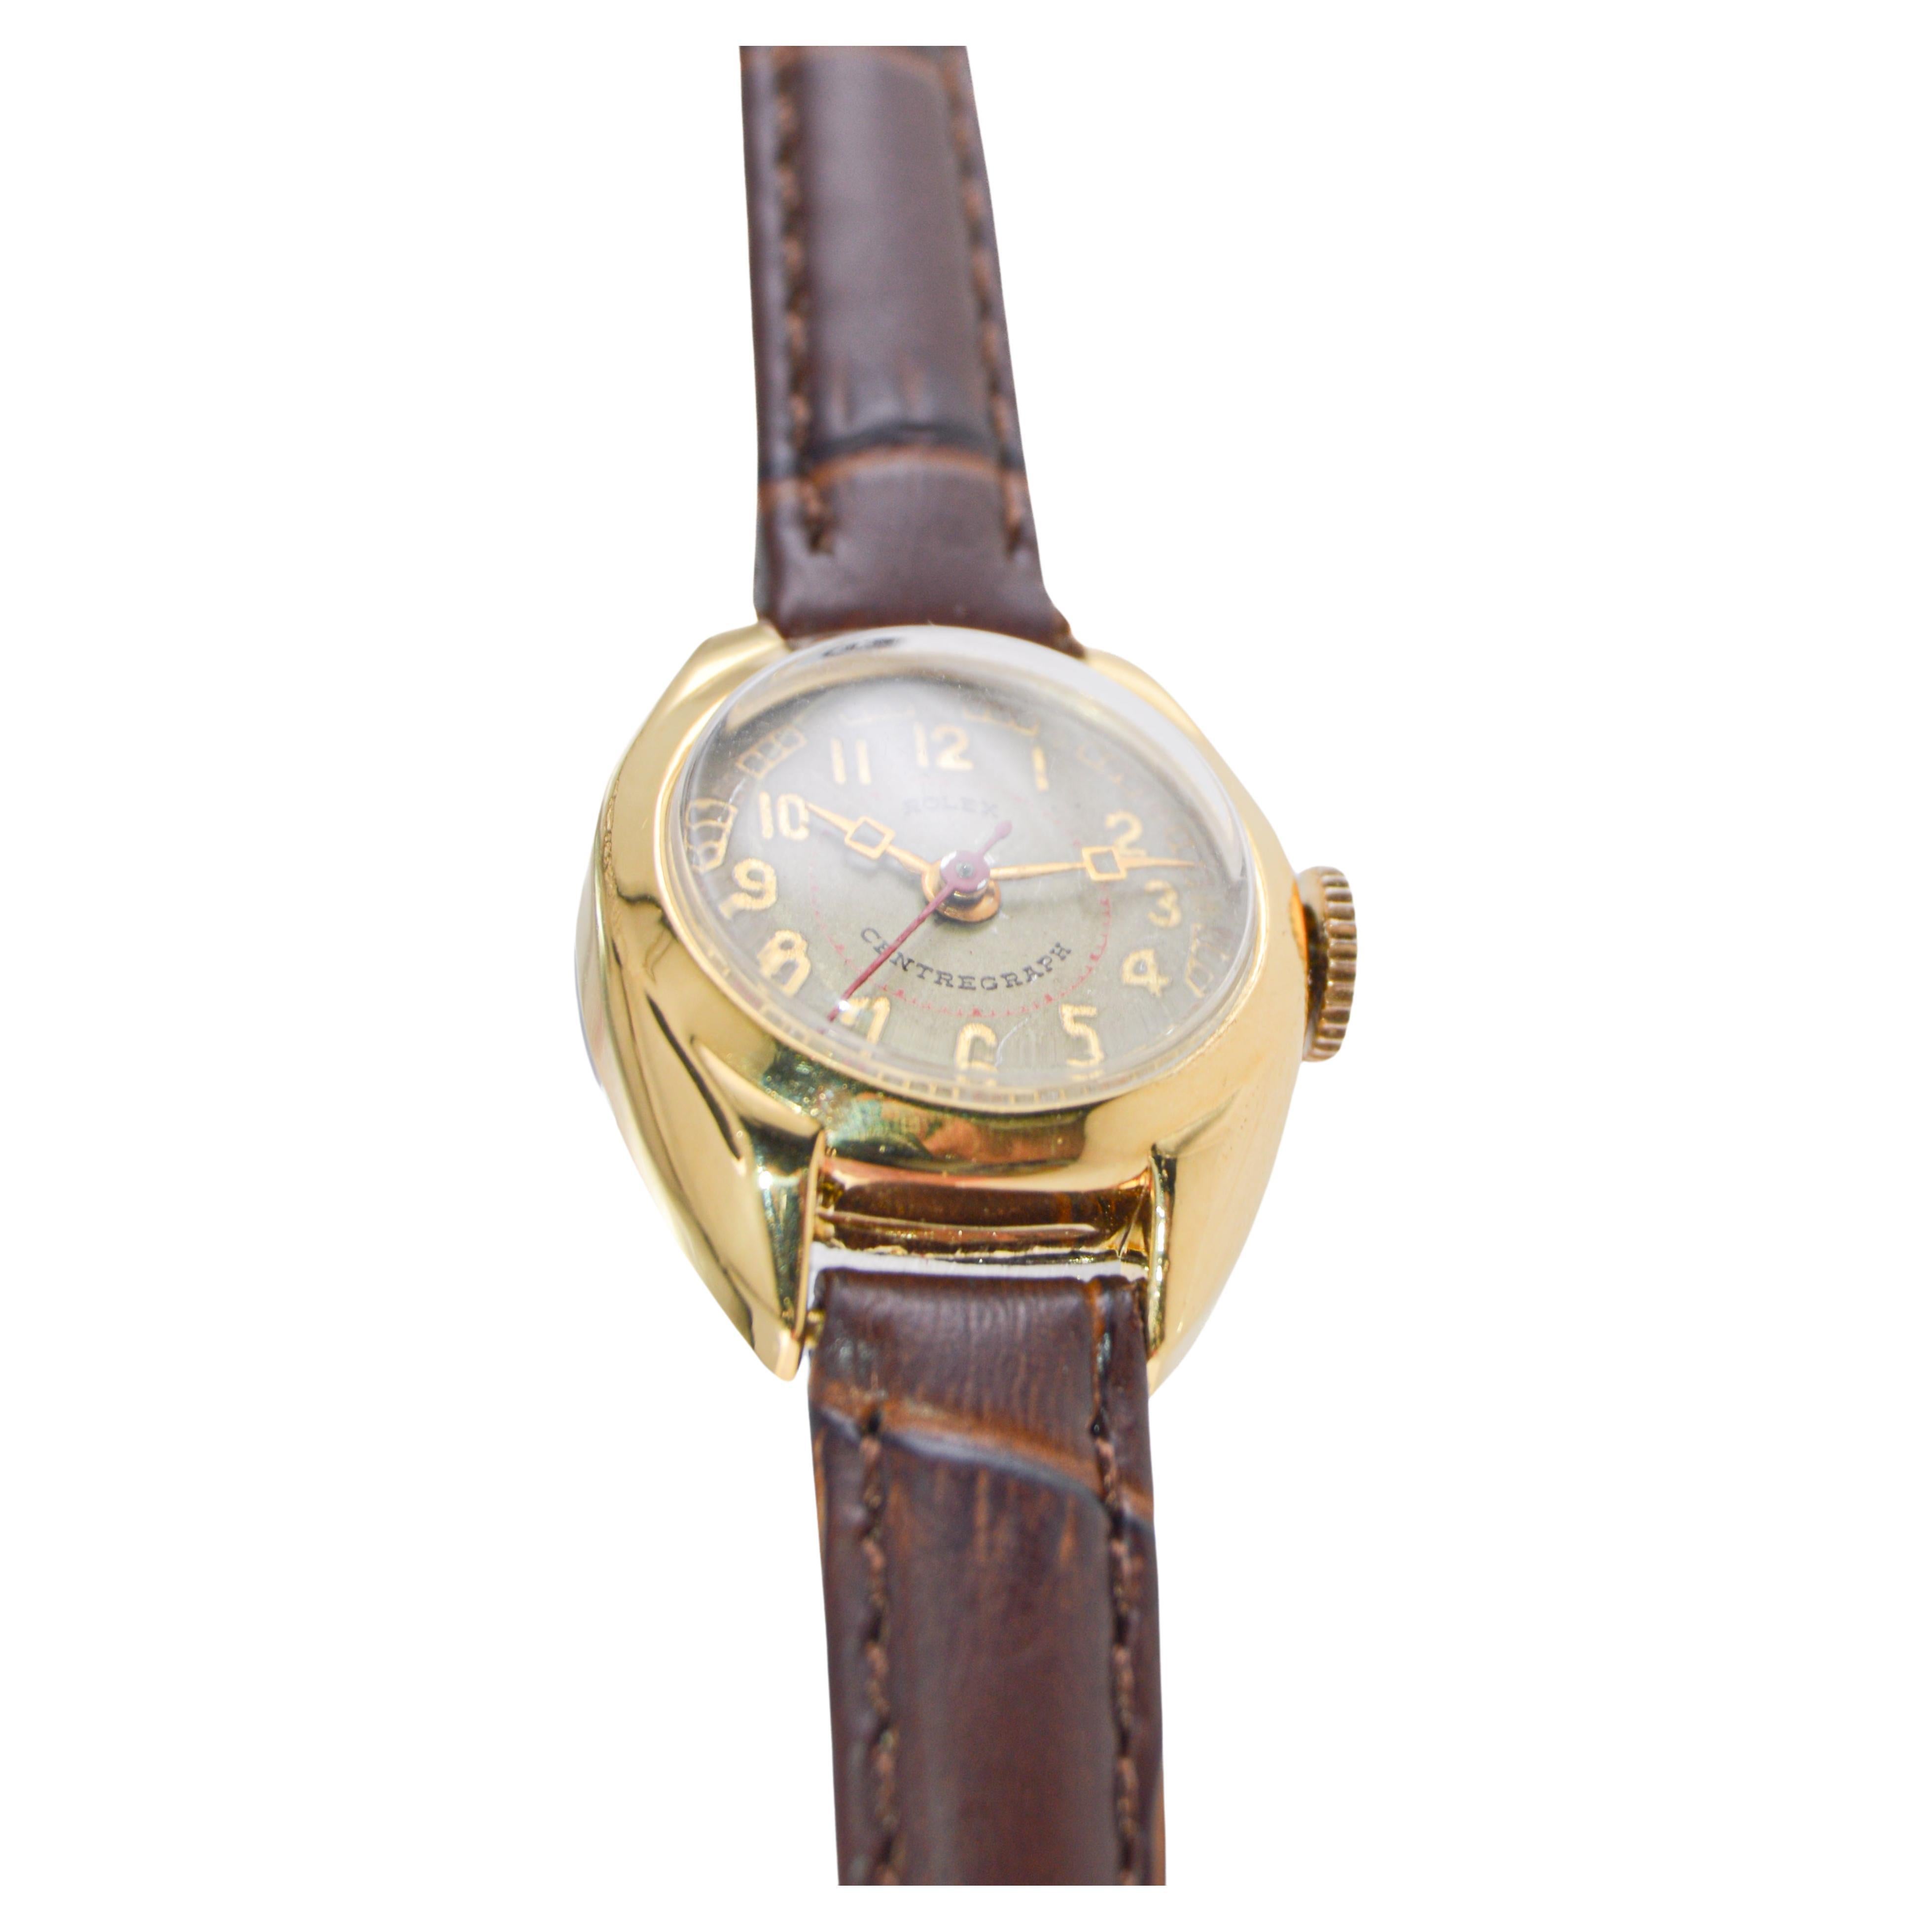 Rolex Centregraph Gold Filled Ladies Wrist Watch circa, 1940's 1